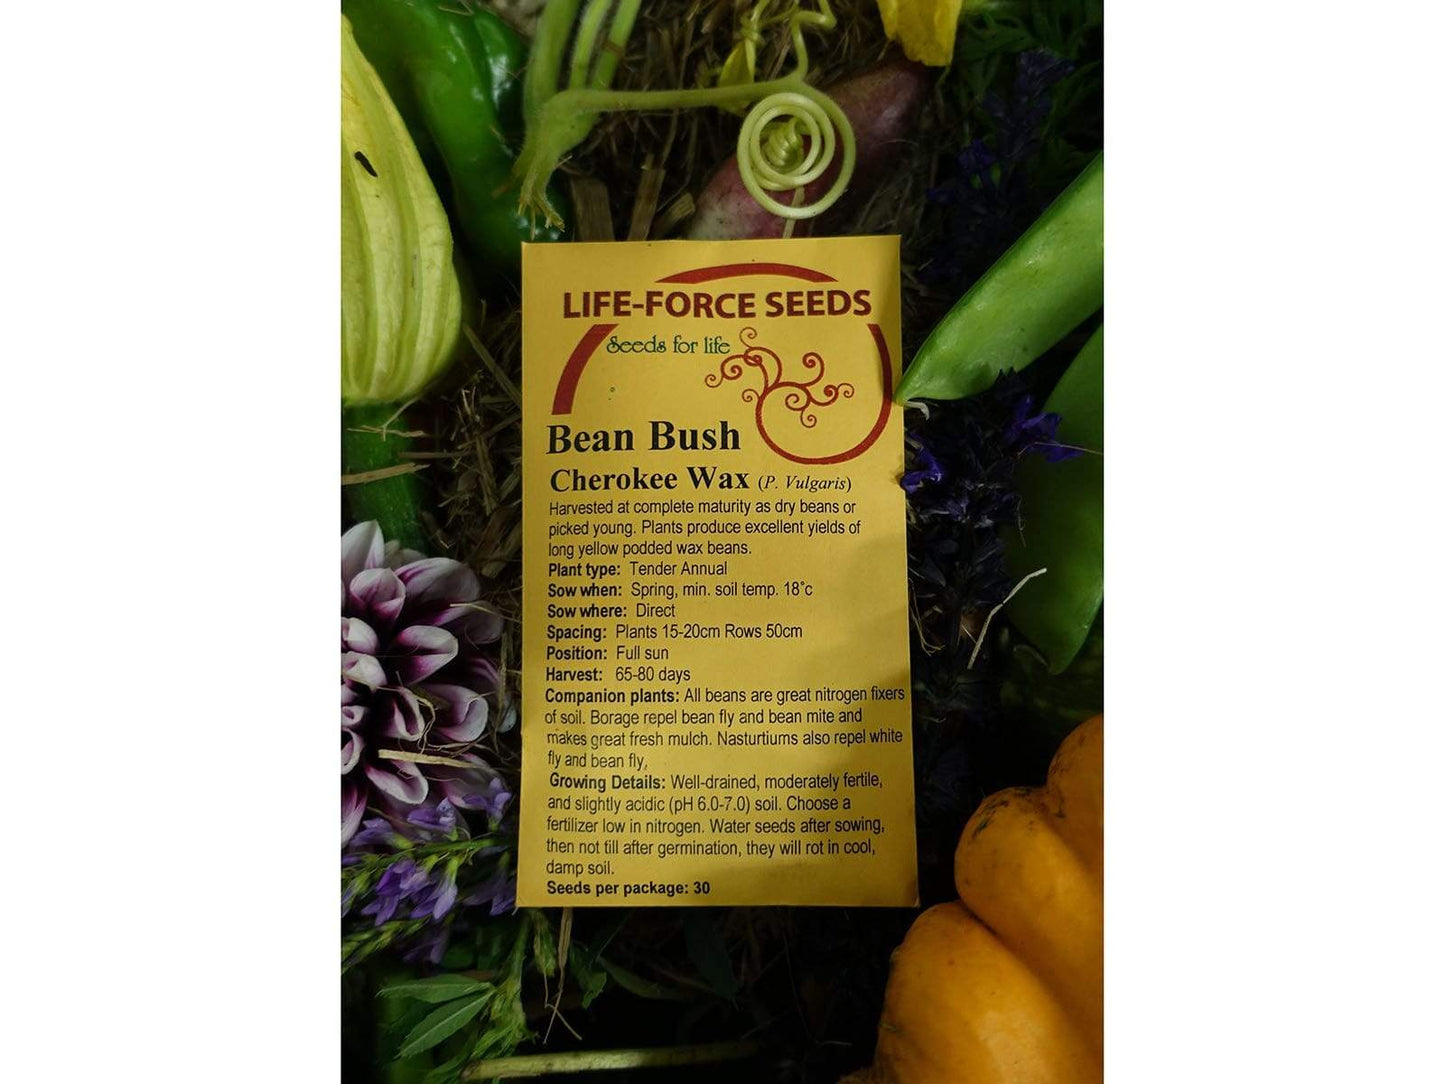 Bean Bush Cherokee Wax - LifeForce Seeds